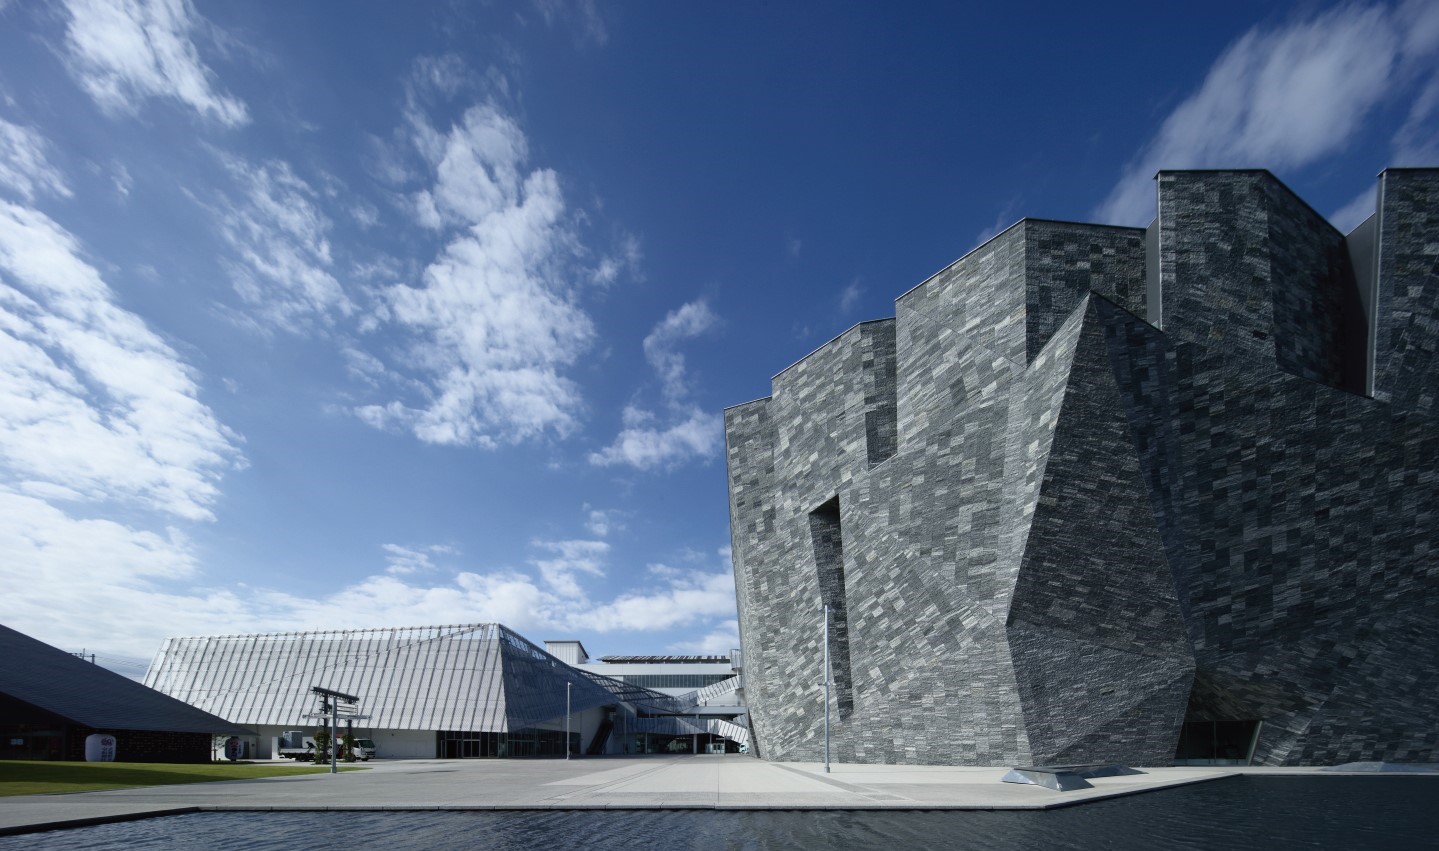 MUSEUM GLOBAL: KADOKAWA CULTURE MUSEUM 全球新文化据点 - 巨石般的超次元奇幻建筑